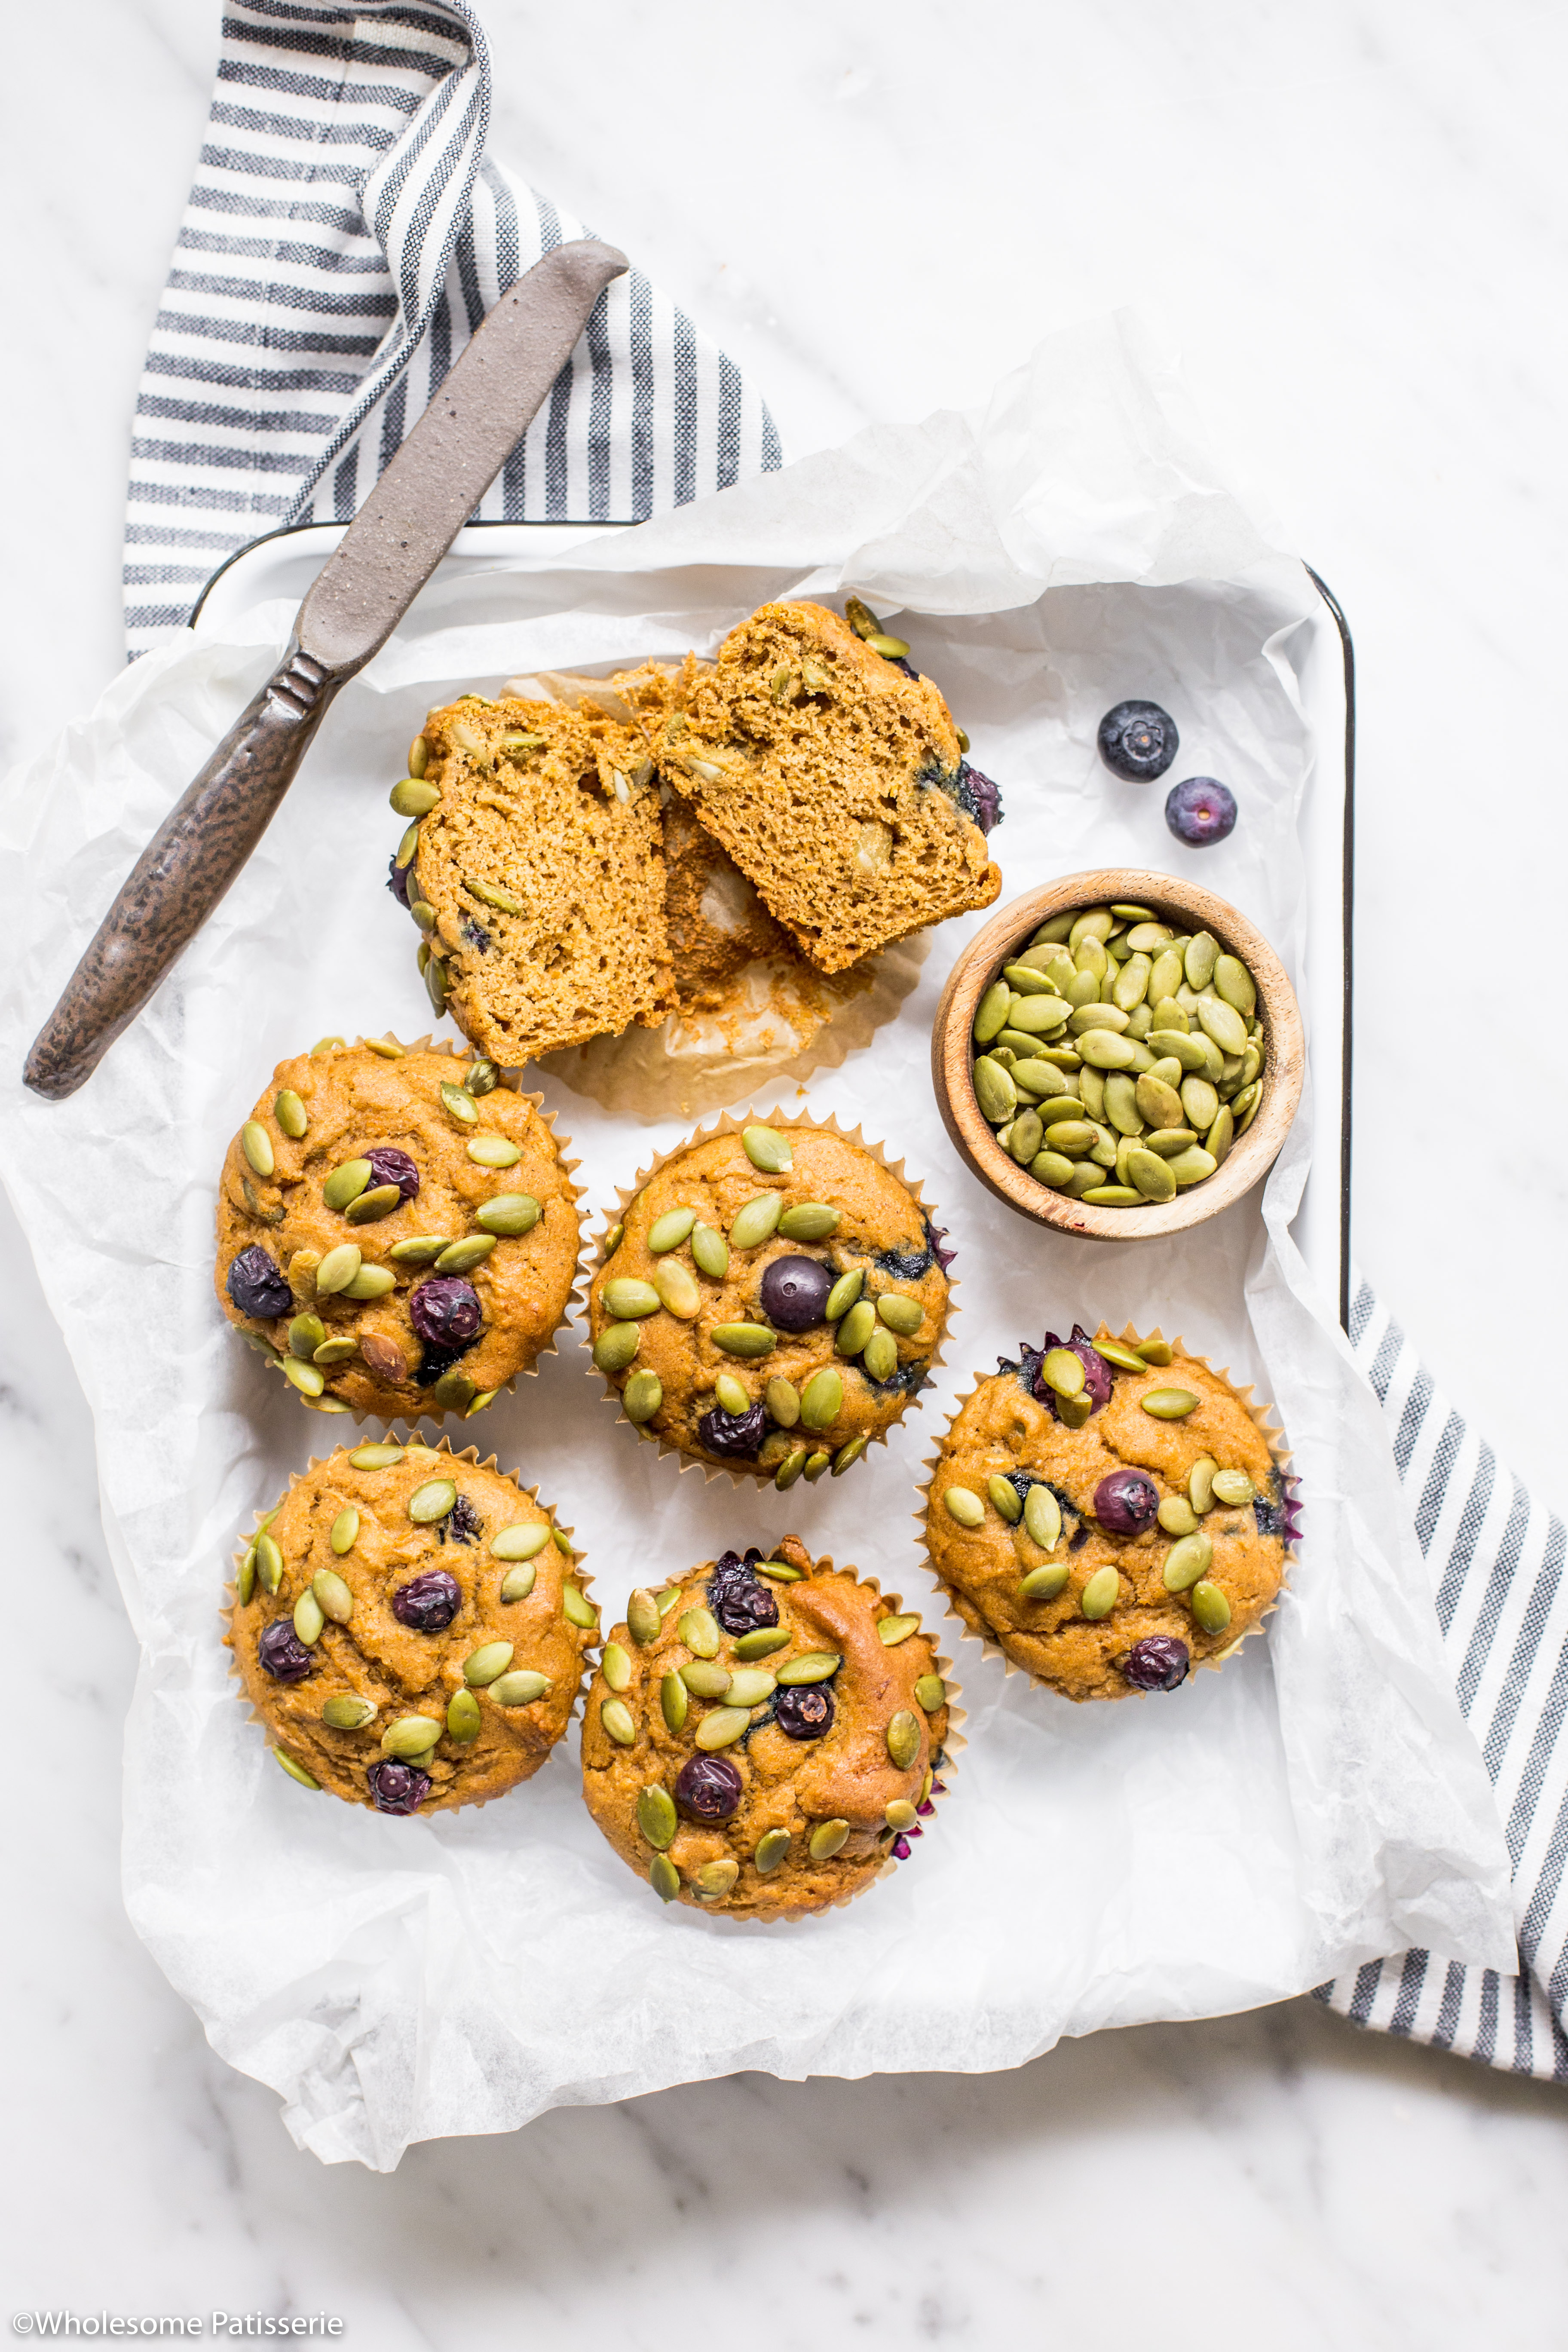 Pumpkin-blueberry-muffins-gluten-free-muffins-baking-easy-simple-quick-breakfast-muffins-homemasde